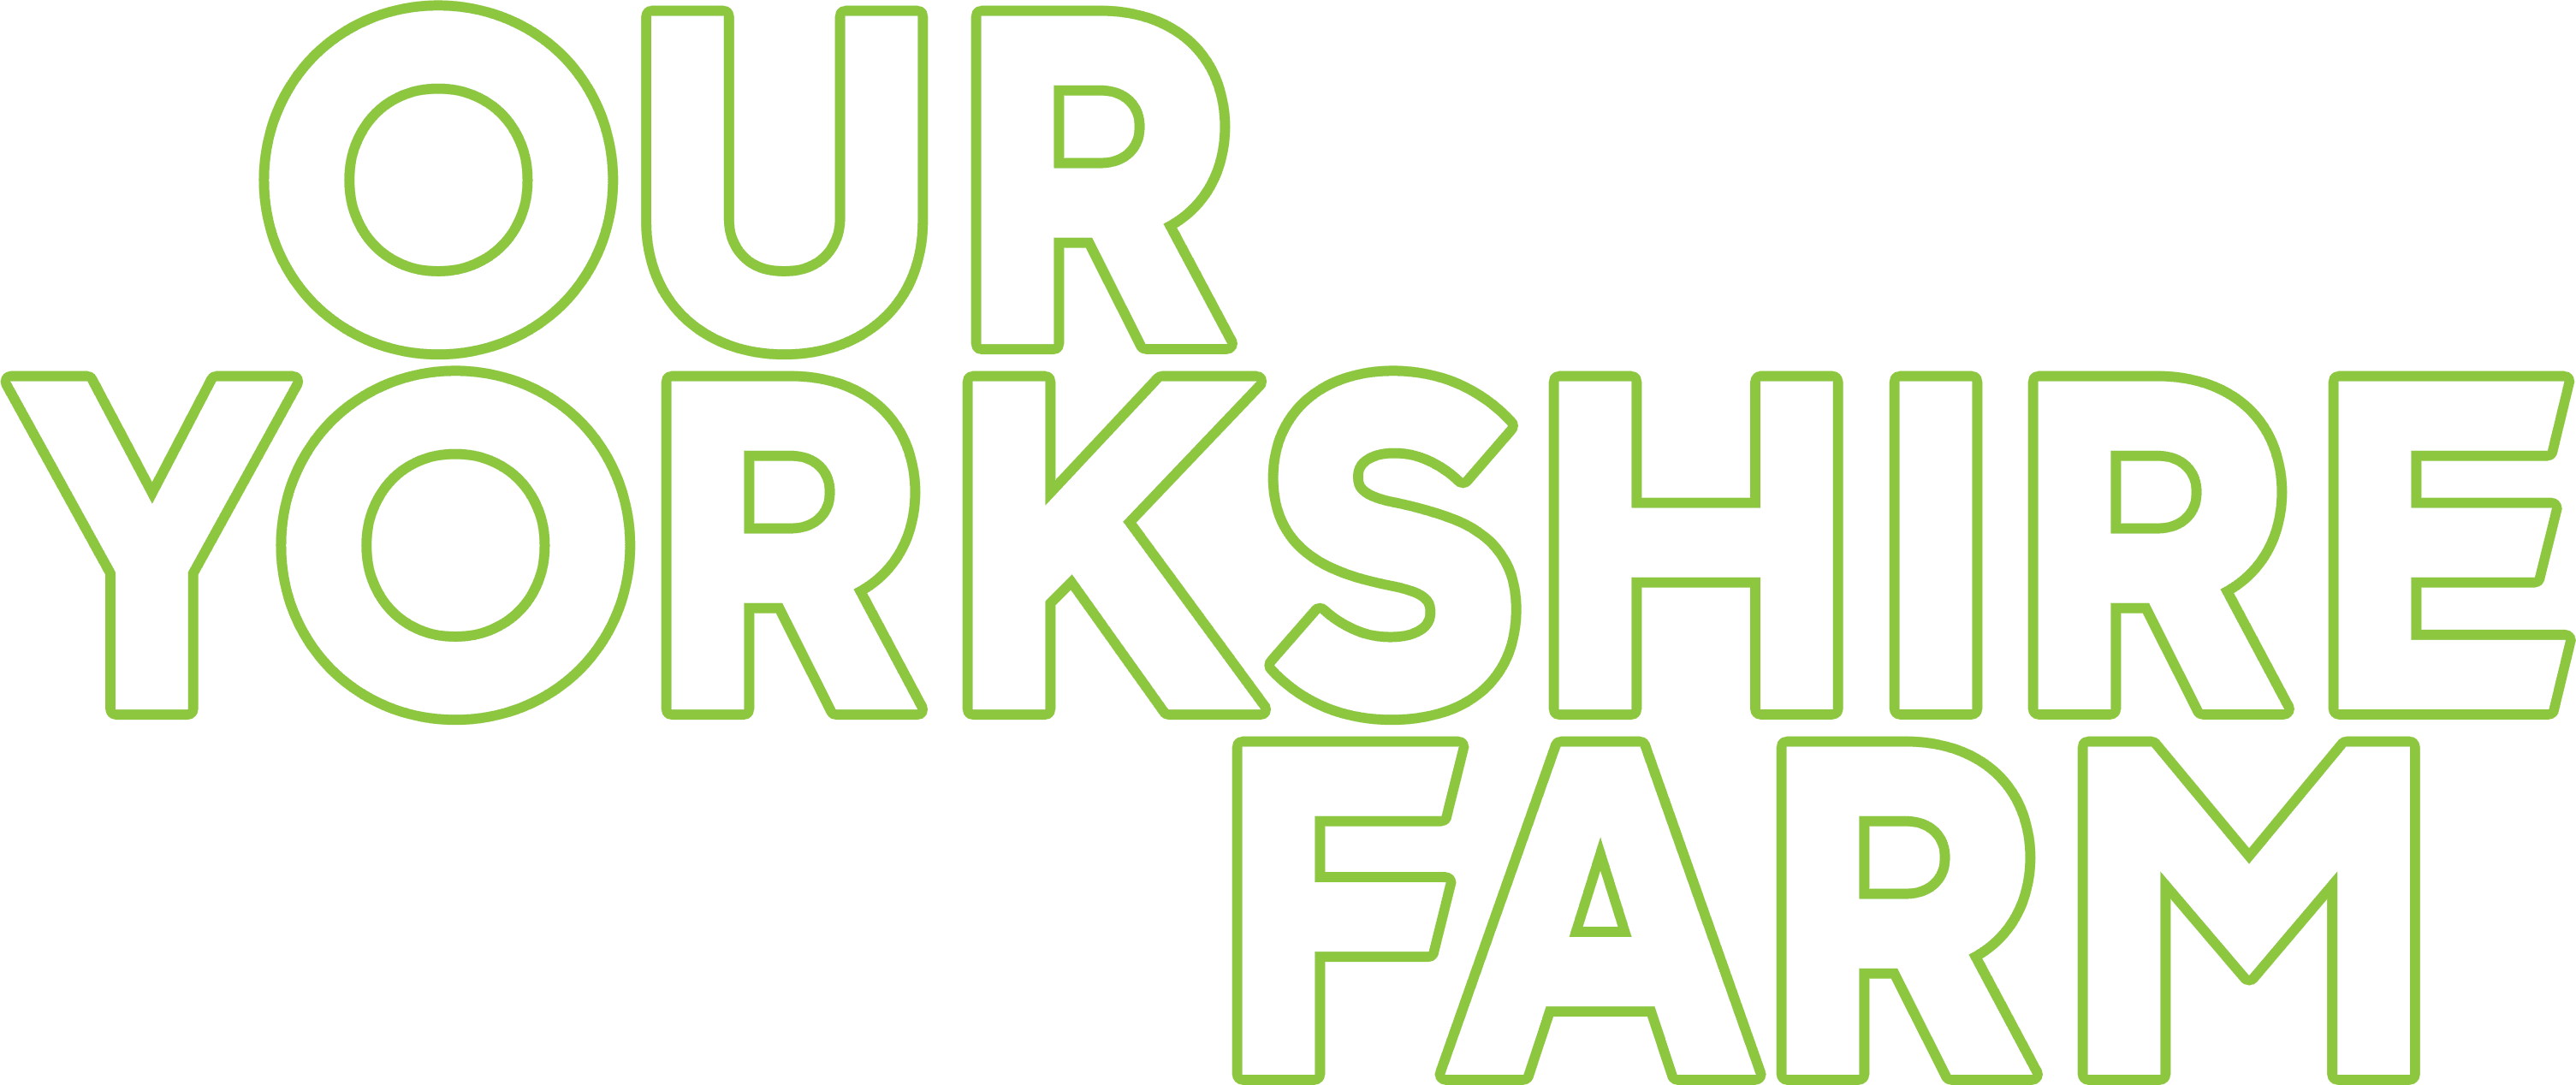 Our Yorkshire Farm logo